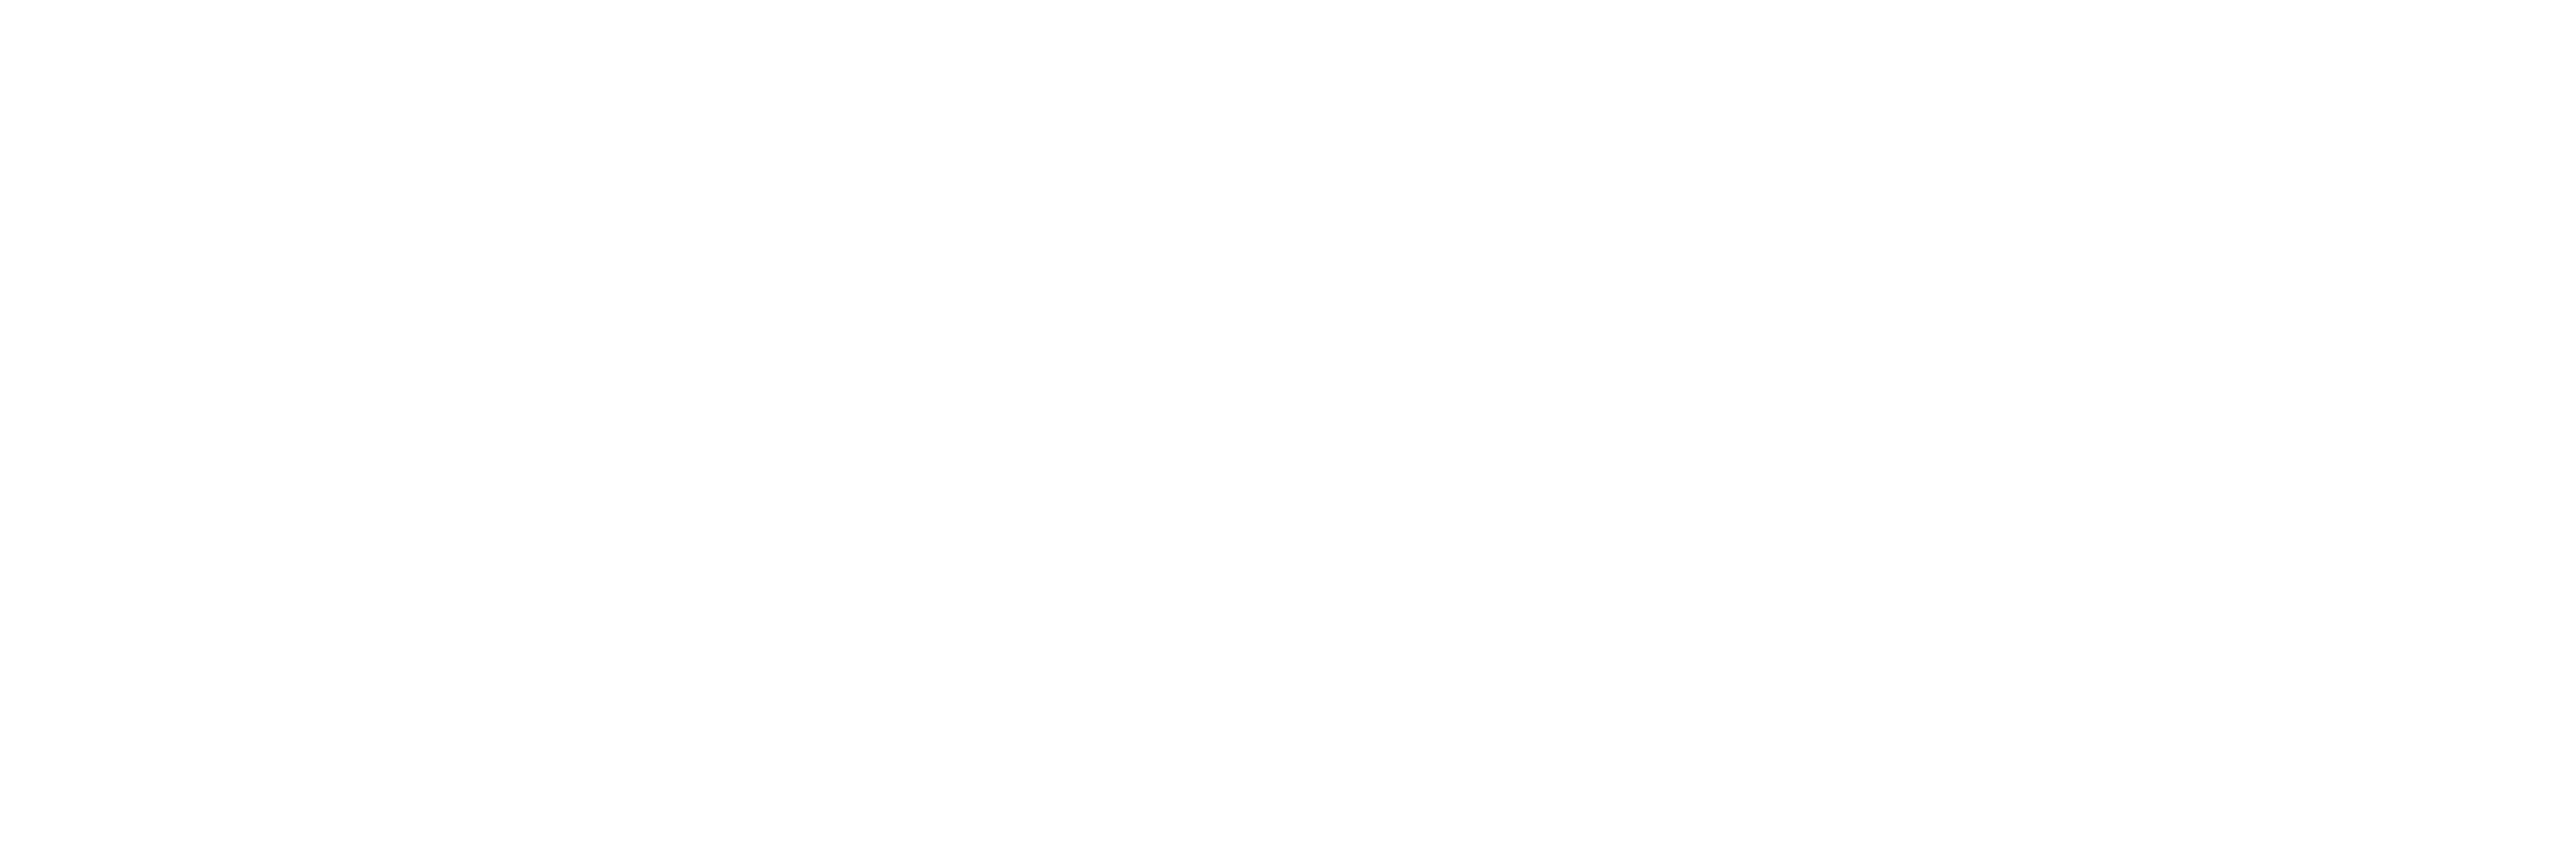 Dornier Logo Horizontal White.png